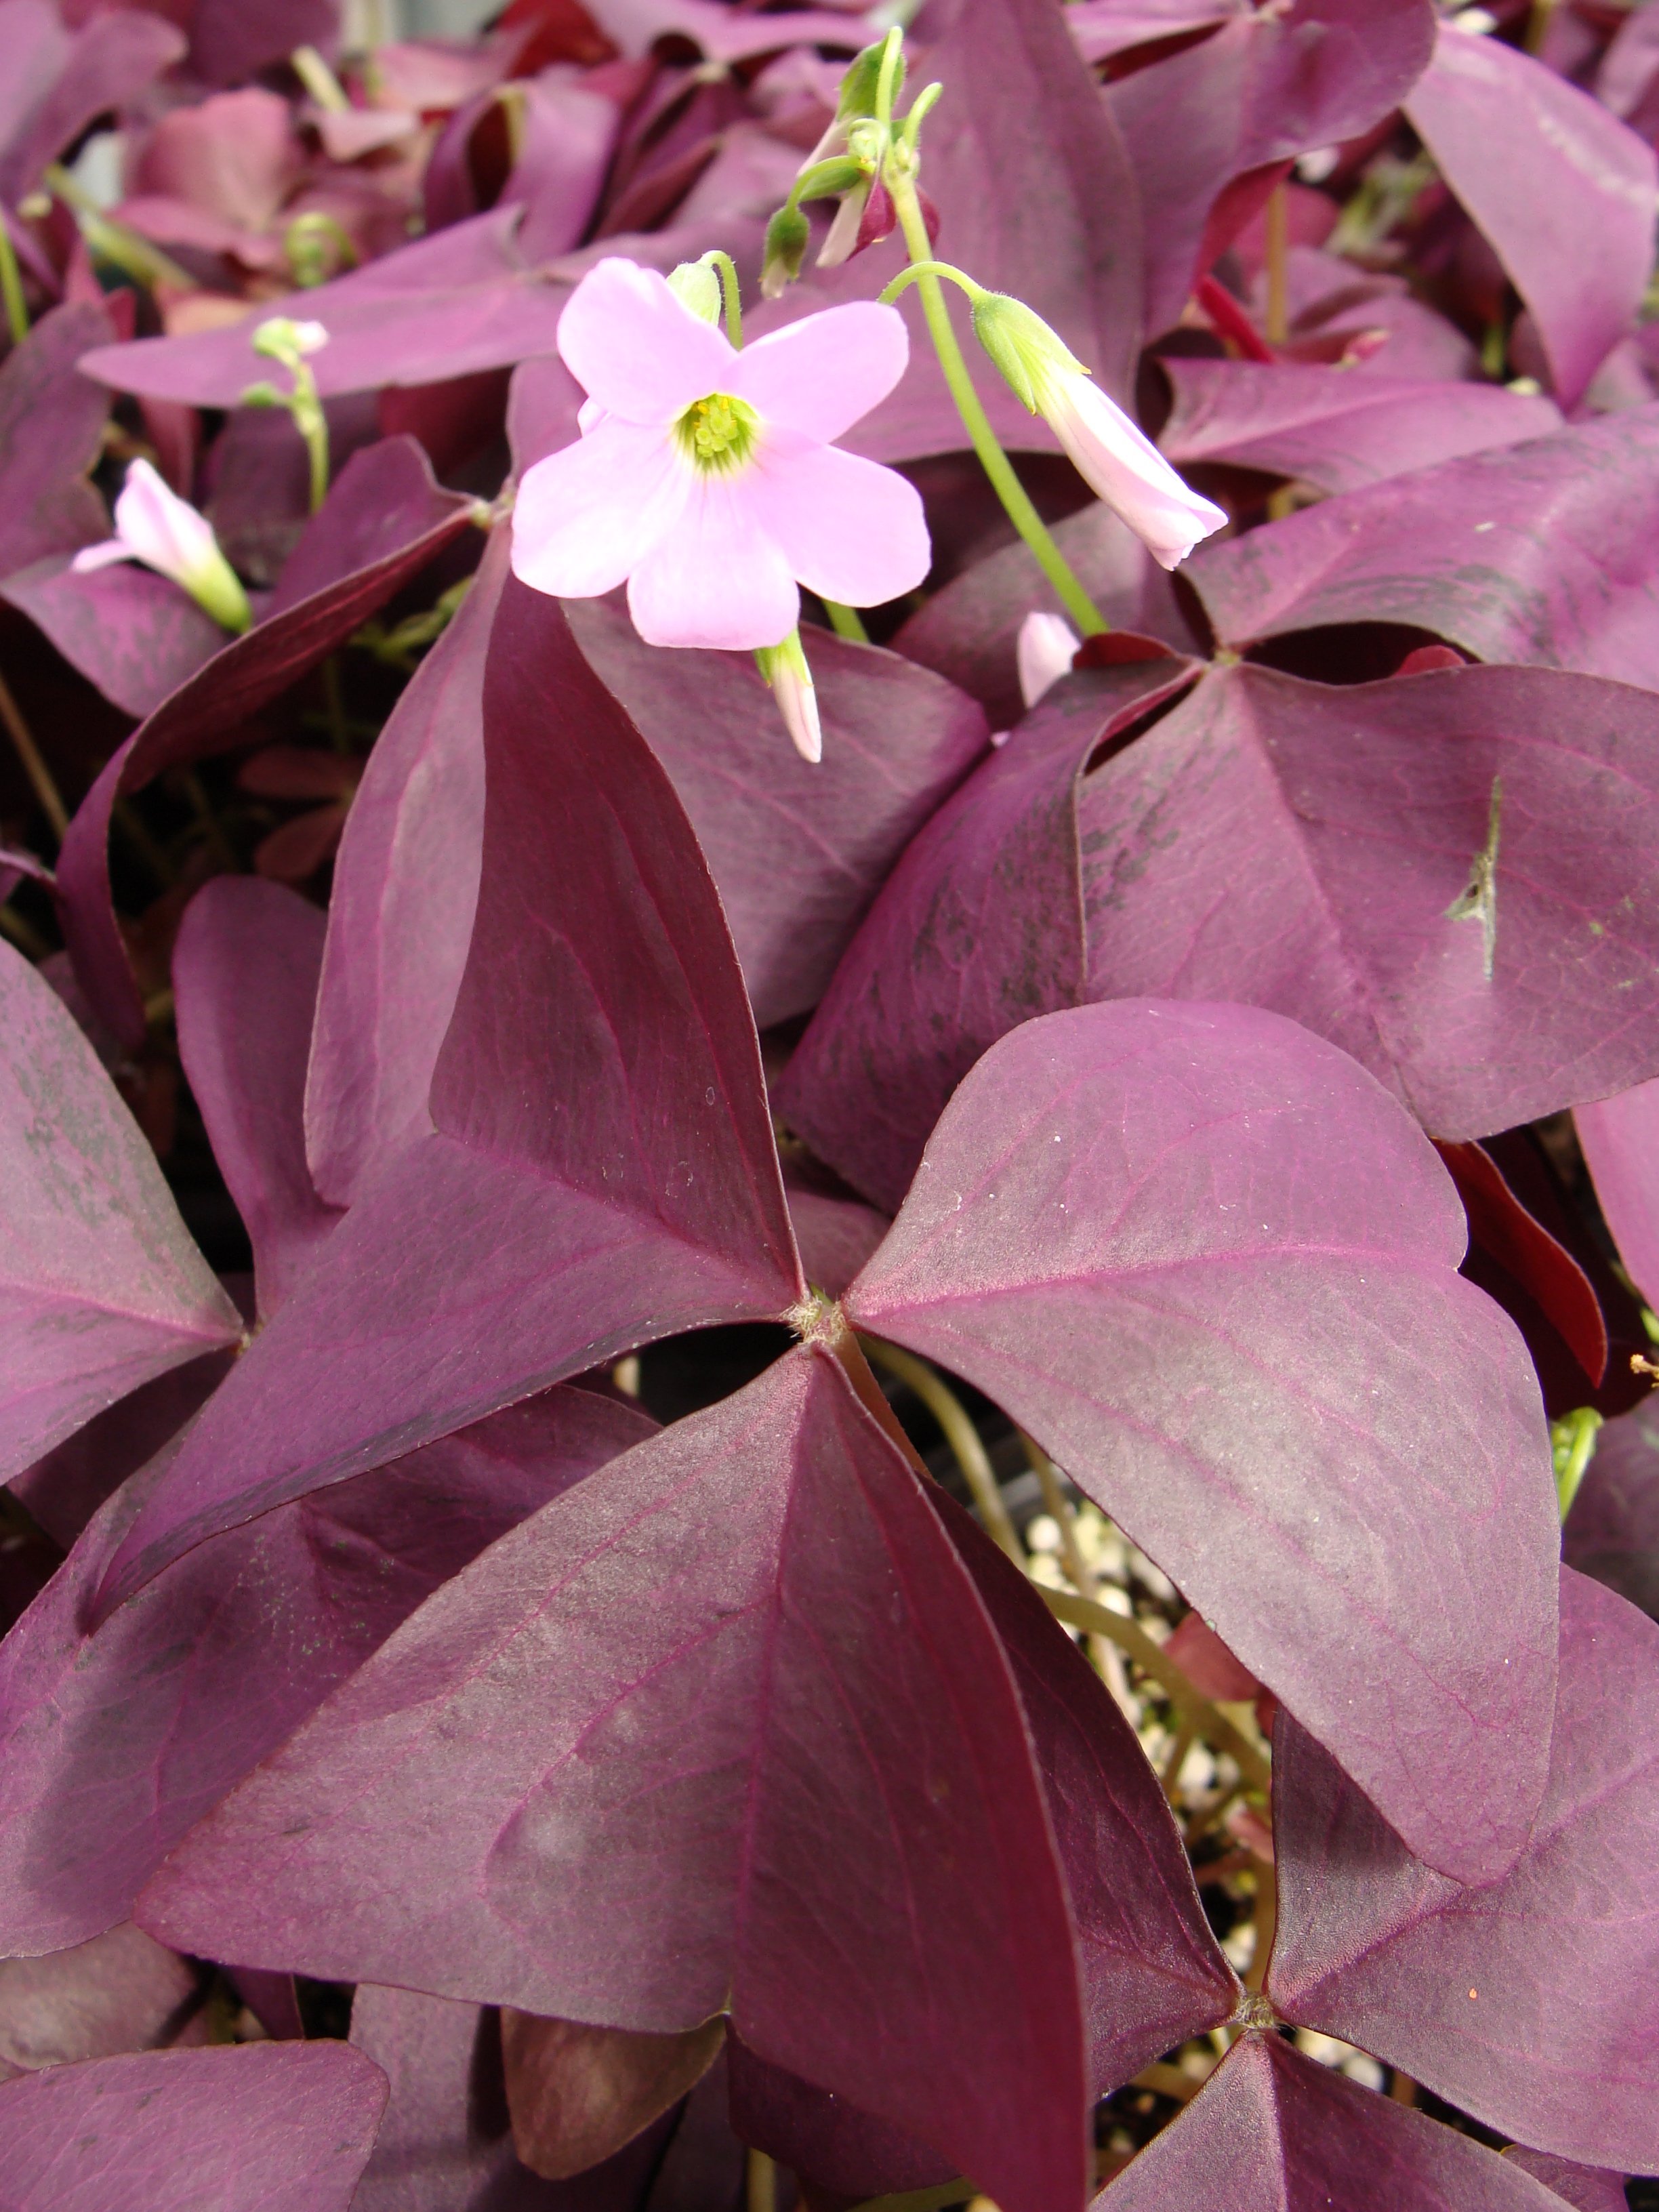 Details about   100 Seeds Oxalis Plants Wood Sorrel Flower Oxalis Purple Shamrock Clover Garden 